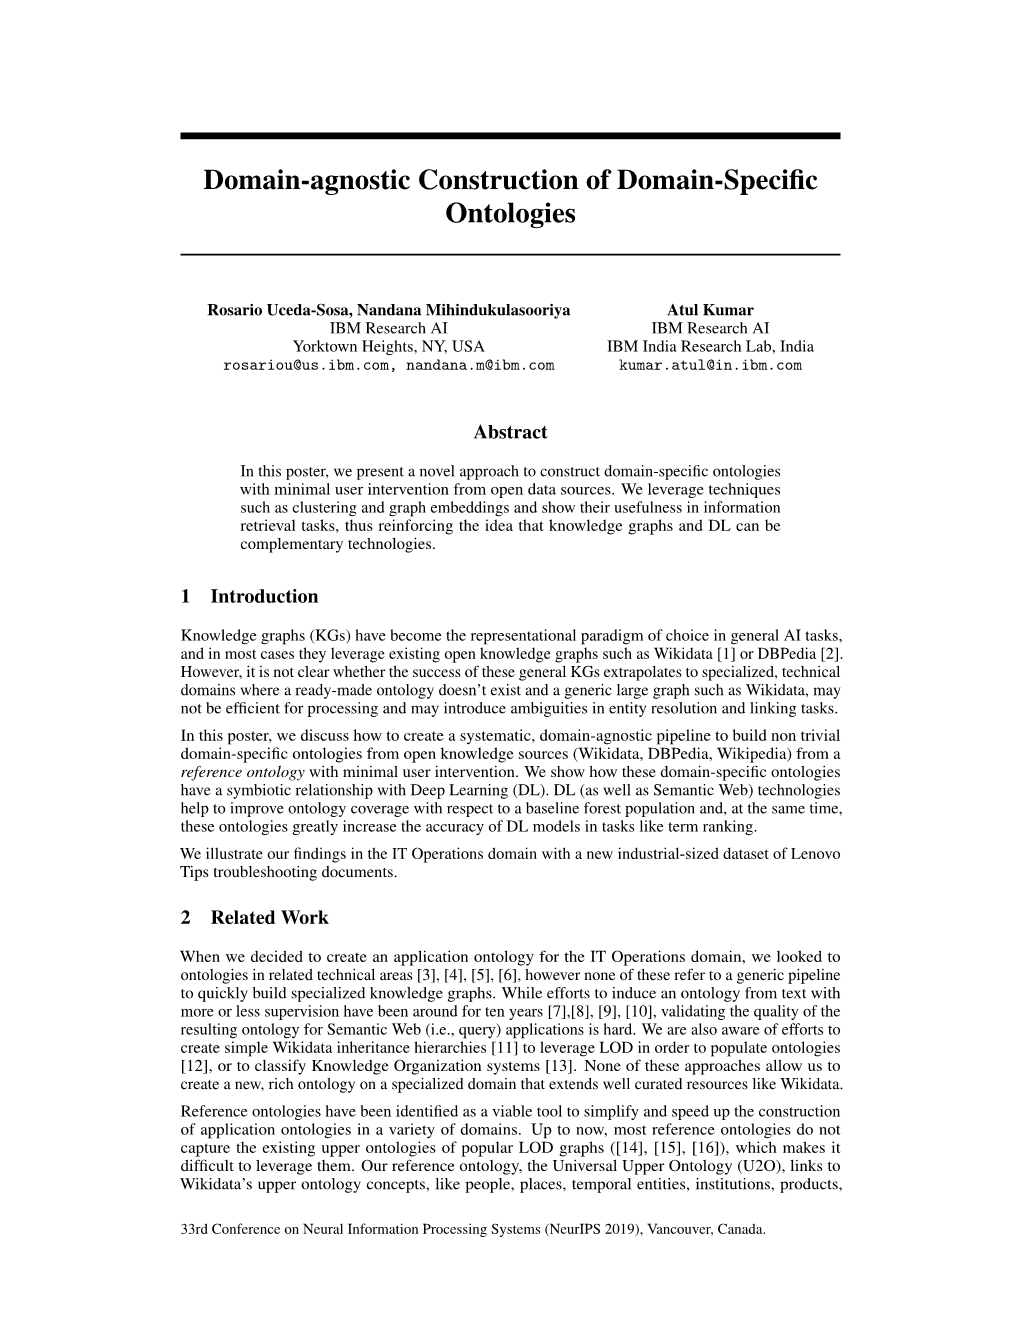 Domain-Agnostic Construction of Domain-Specific Ontologies